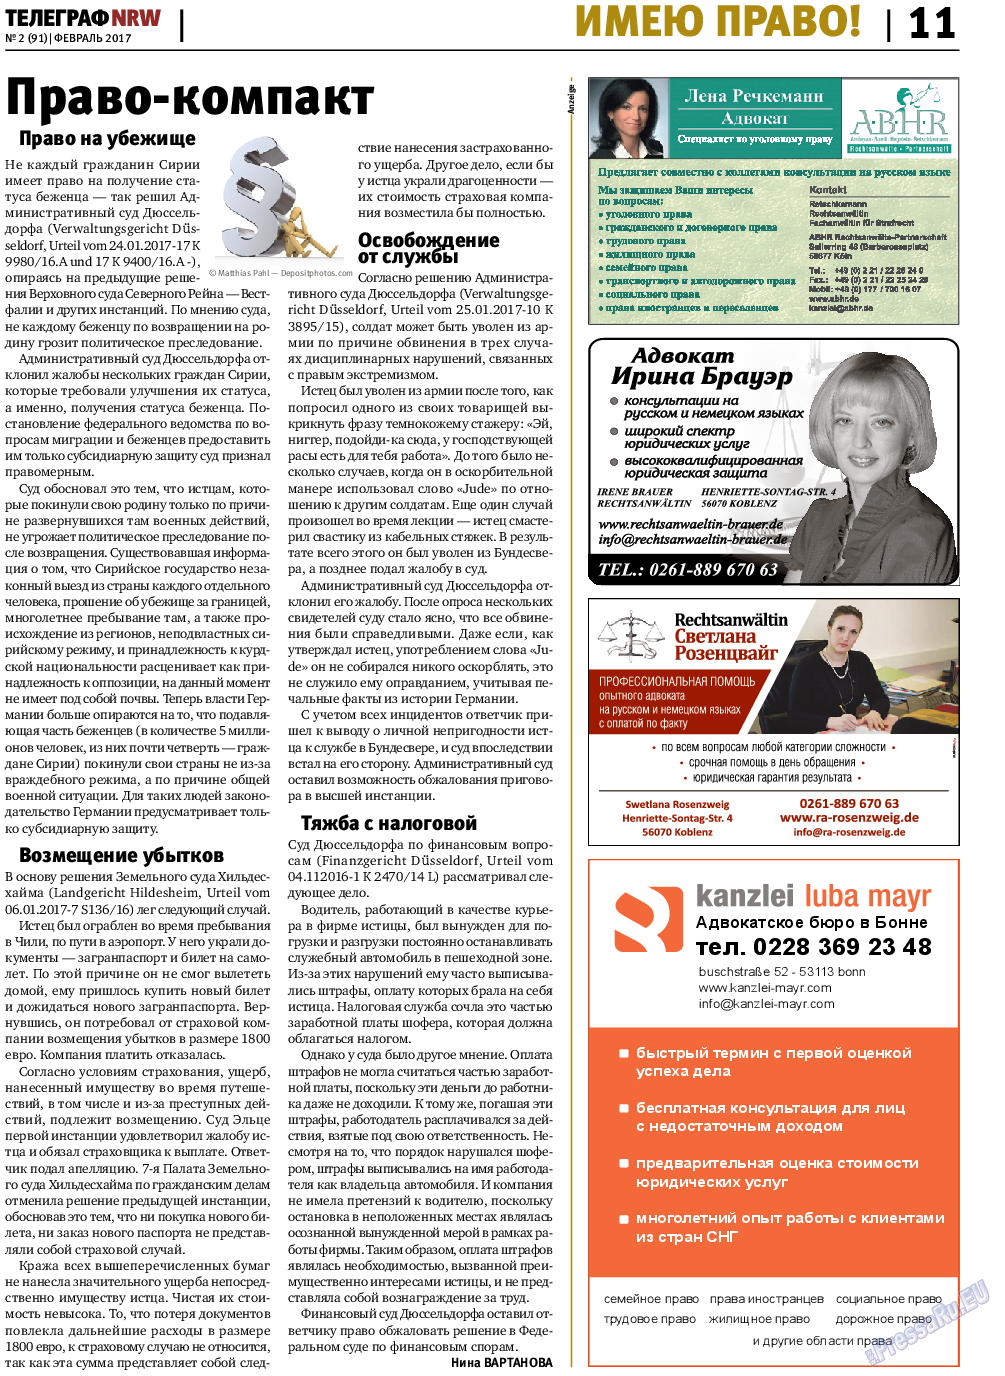 Телеграф NRW, газета. 2017 №2 стр.11